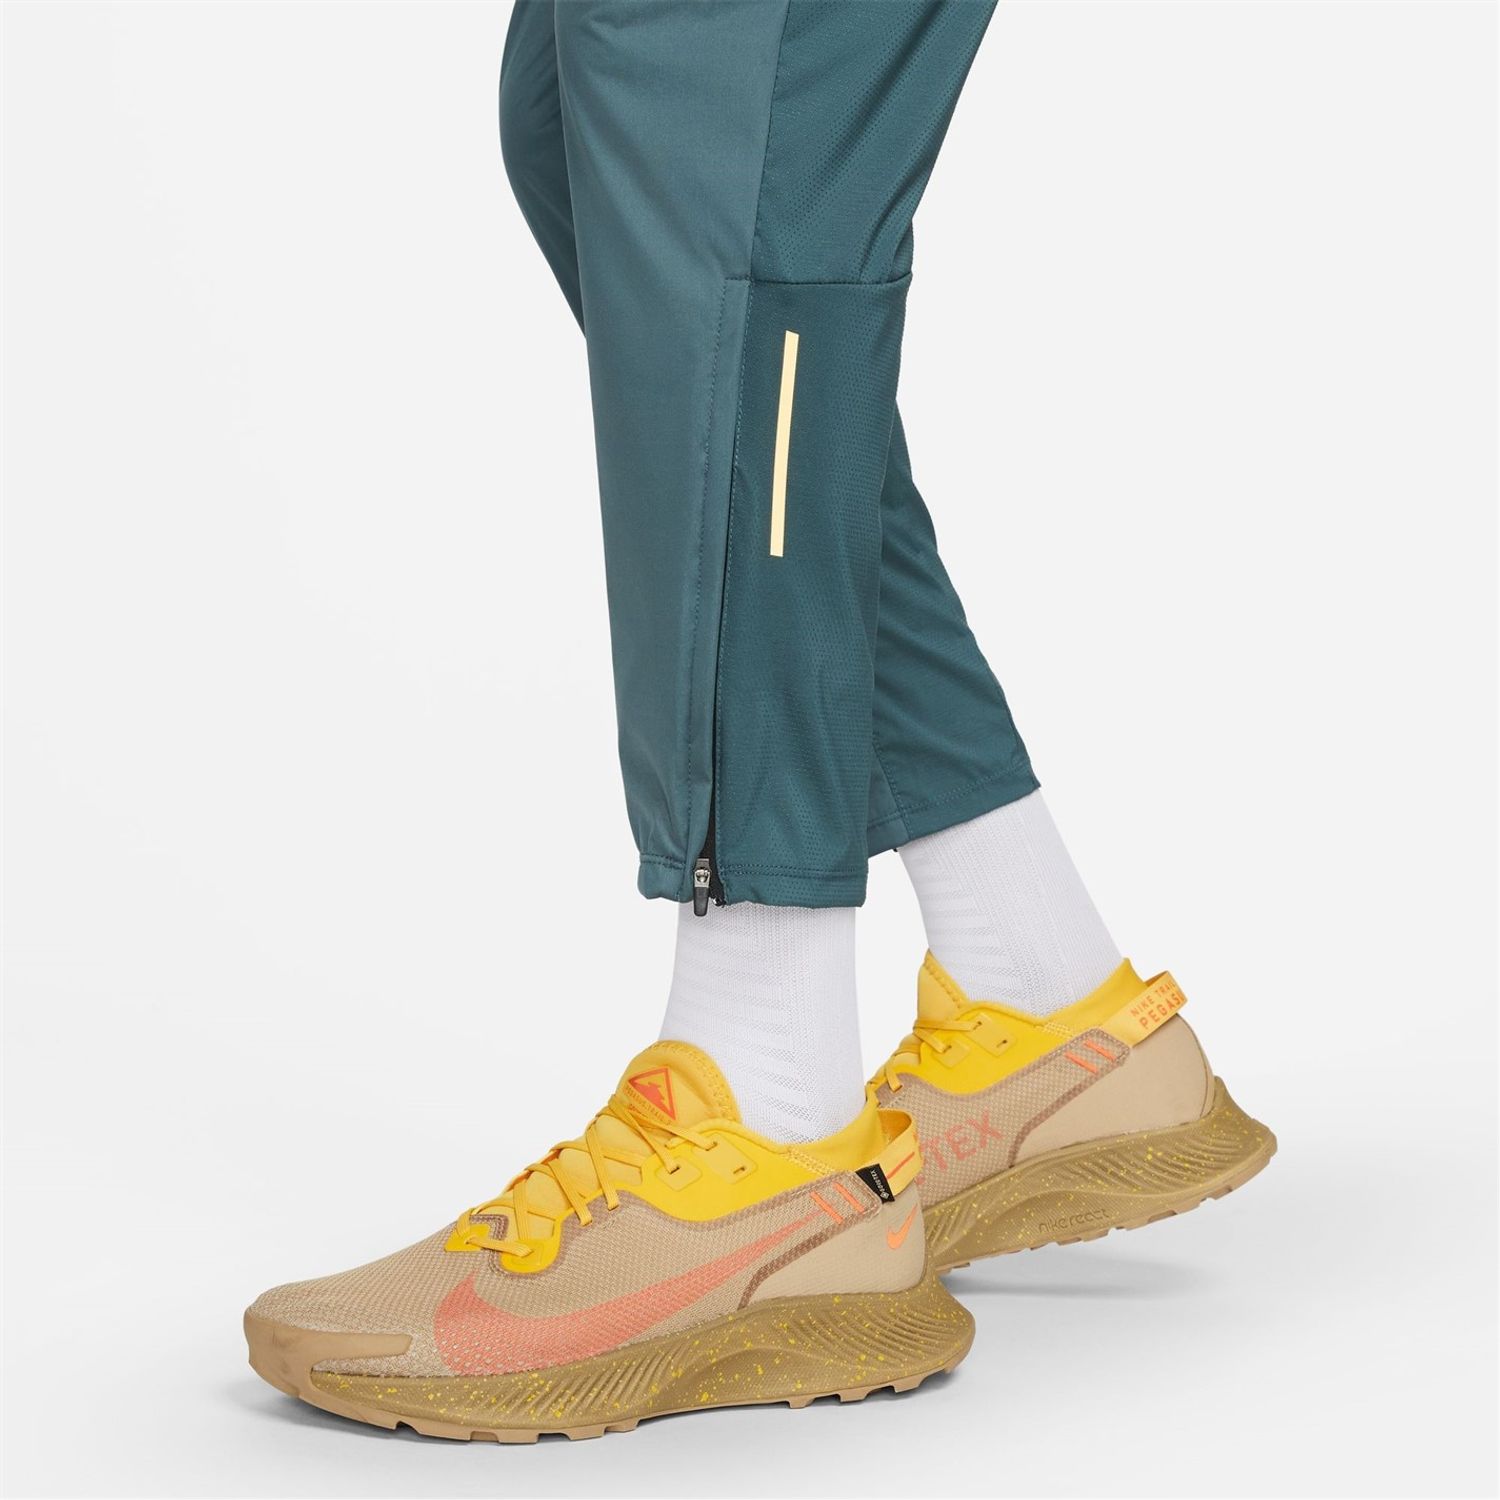 Nike Mens Dri-FIT Phenom Elite Trousers (Green)